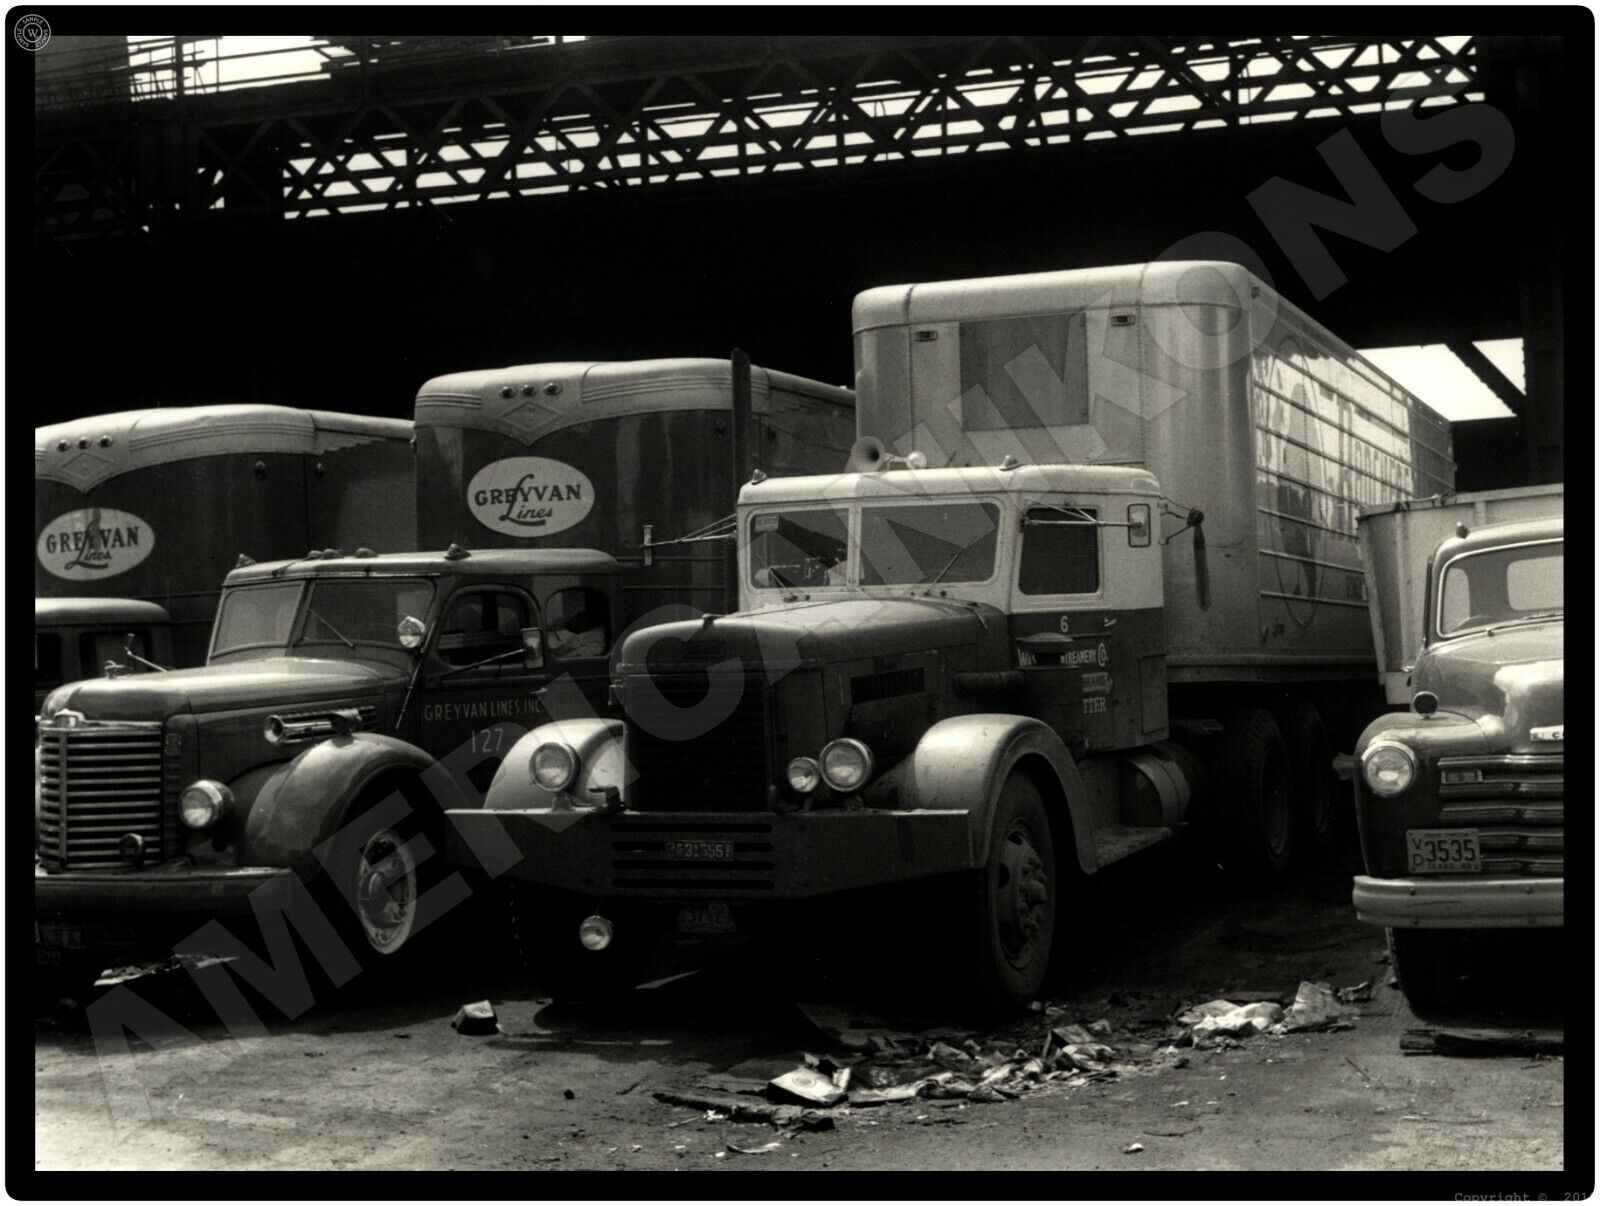 1949 Peterbilt Trucks New Metal Sign: Truck Creamery & Greyvan Sleeper Cabs Chic